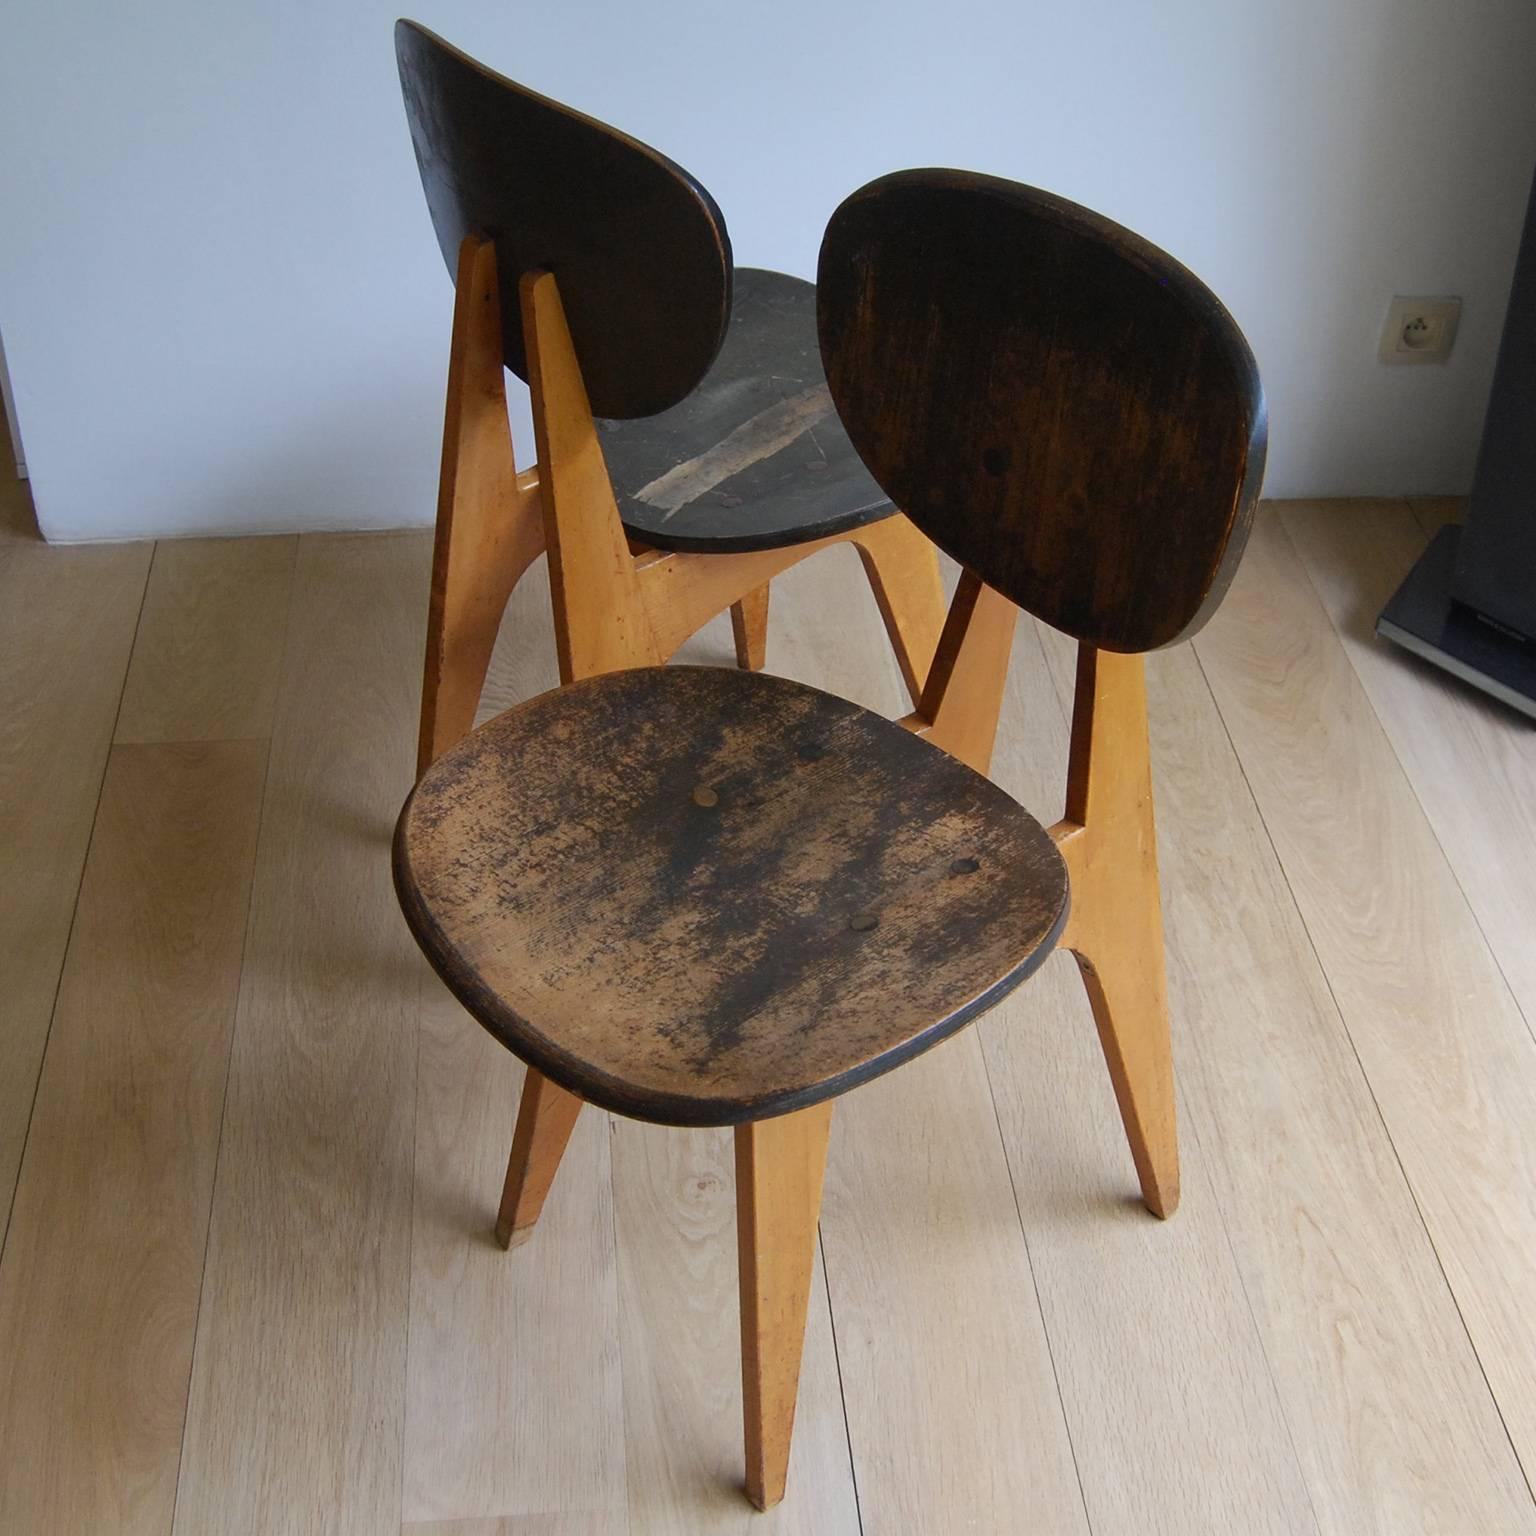 Pair of beechwood side chairs, model no. 3221, designed by Junzo Sakakura, circa 1953.
Manufactured by Tendo Mokko, Japan.

Literature: Junzo Sakakura, Architect: Living in Modernism: Housing, Furniture and Design, Tokyo, 2009, p. 75, fig. 67, p.